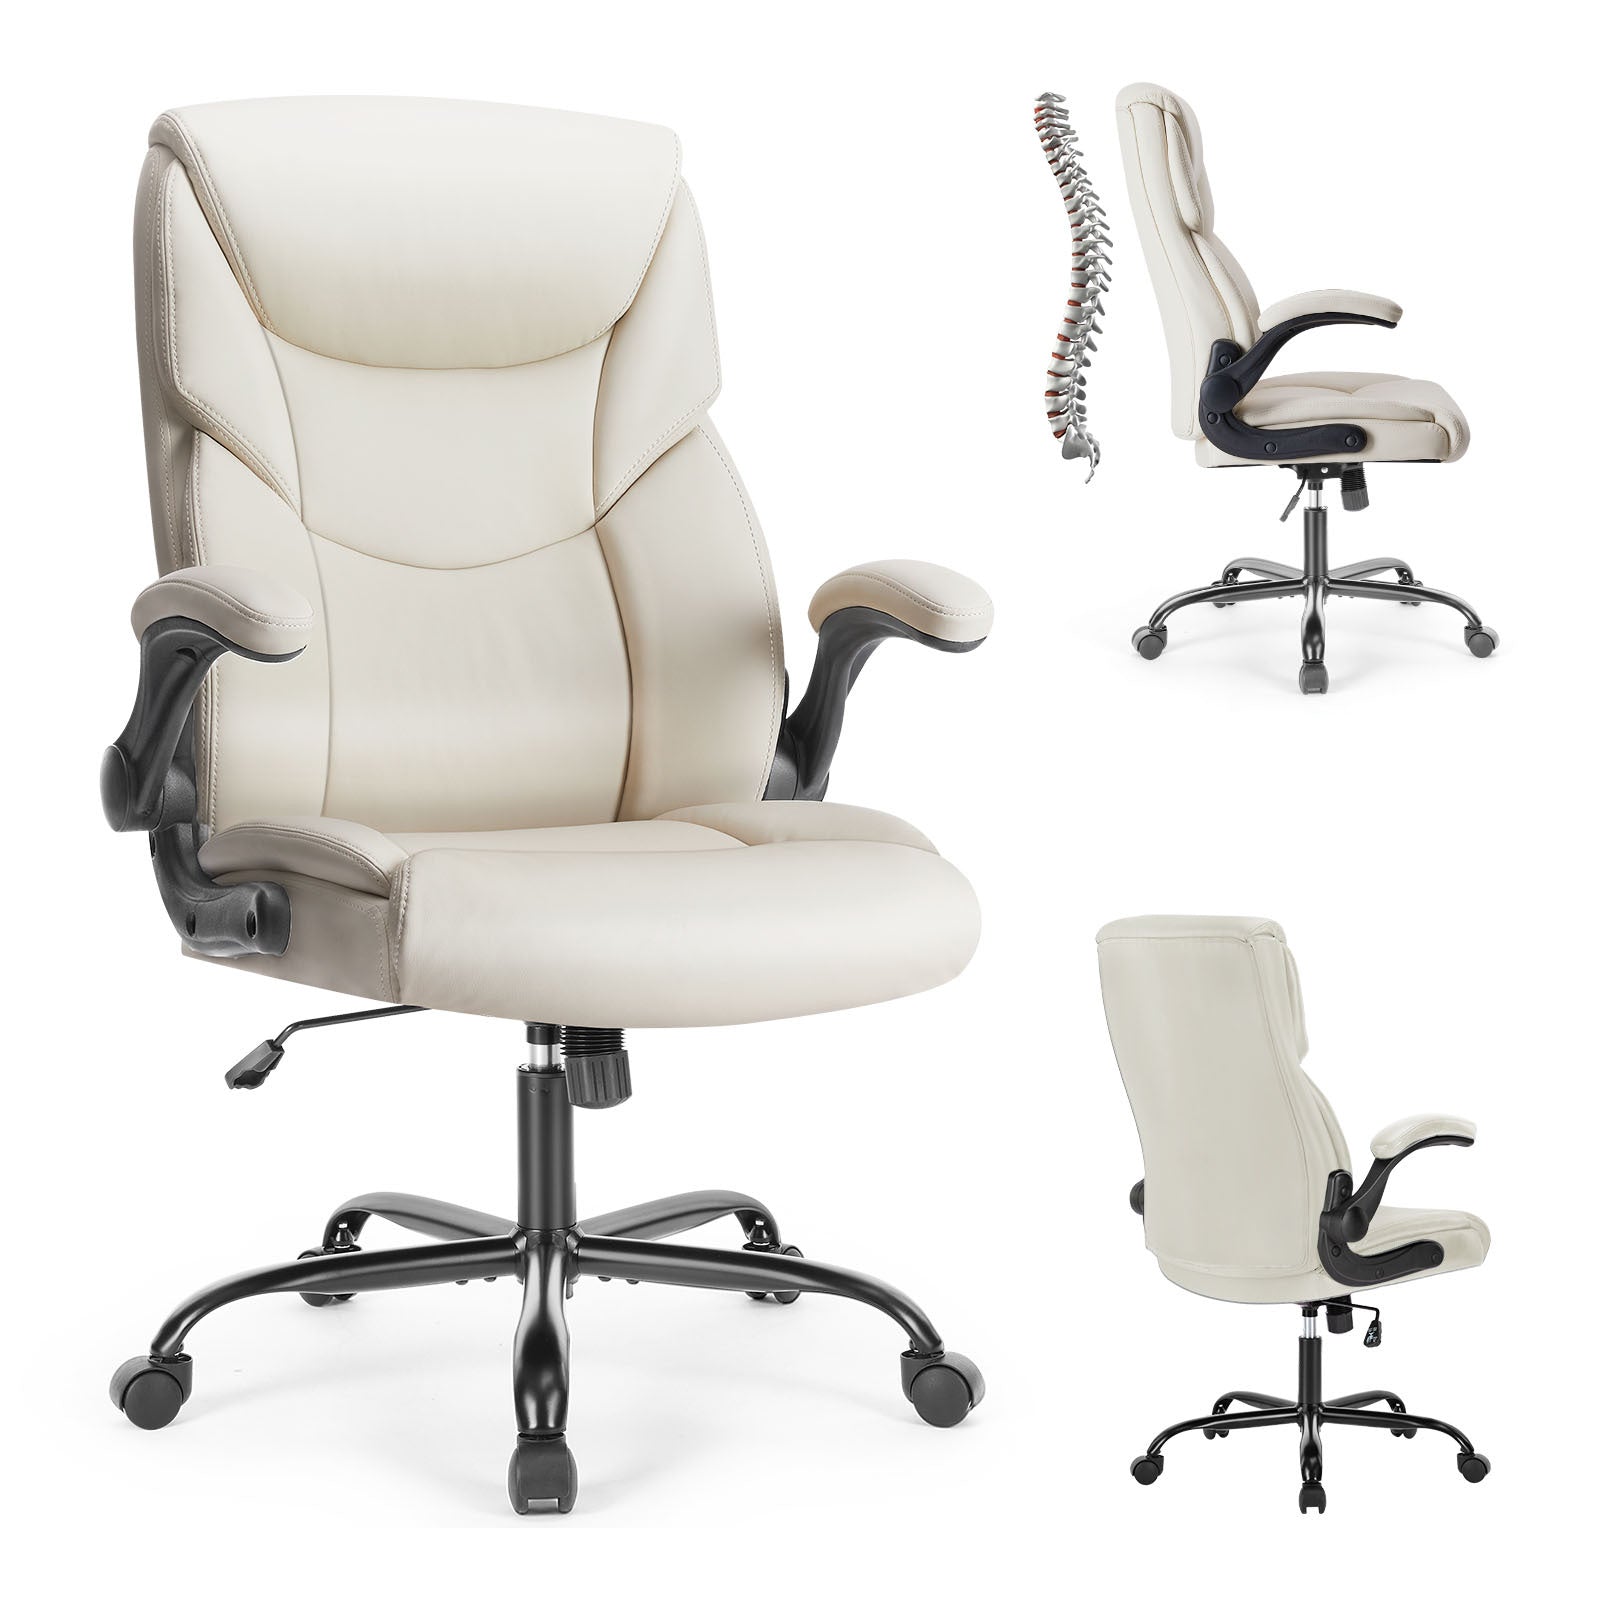 Sweetcrispy Executive Office PU Leather Desk Chair white-pu leather